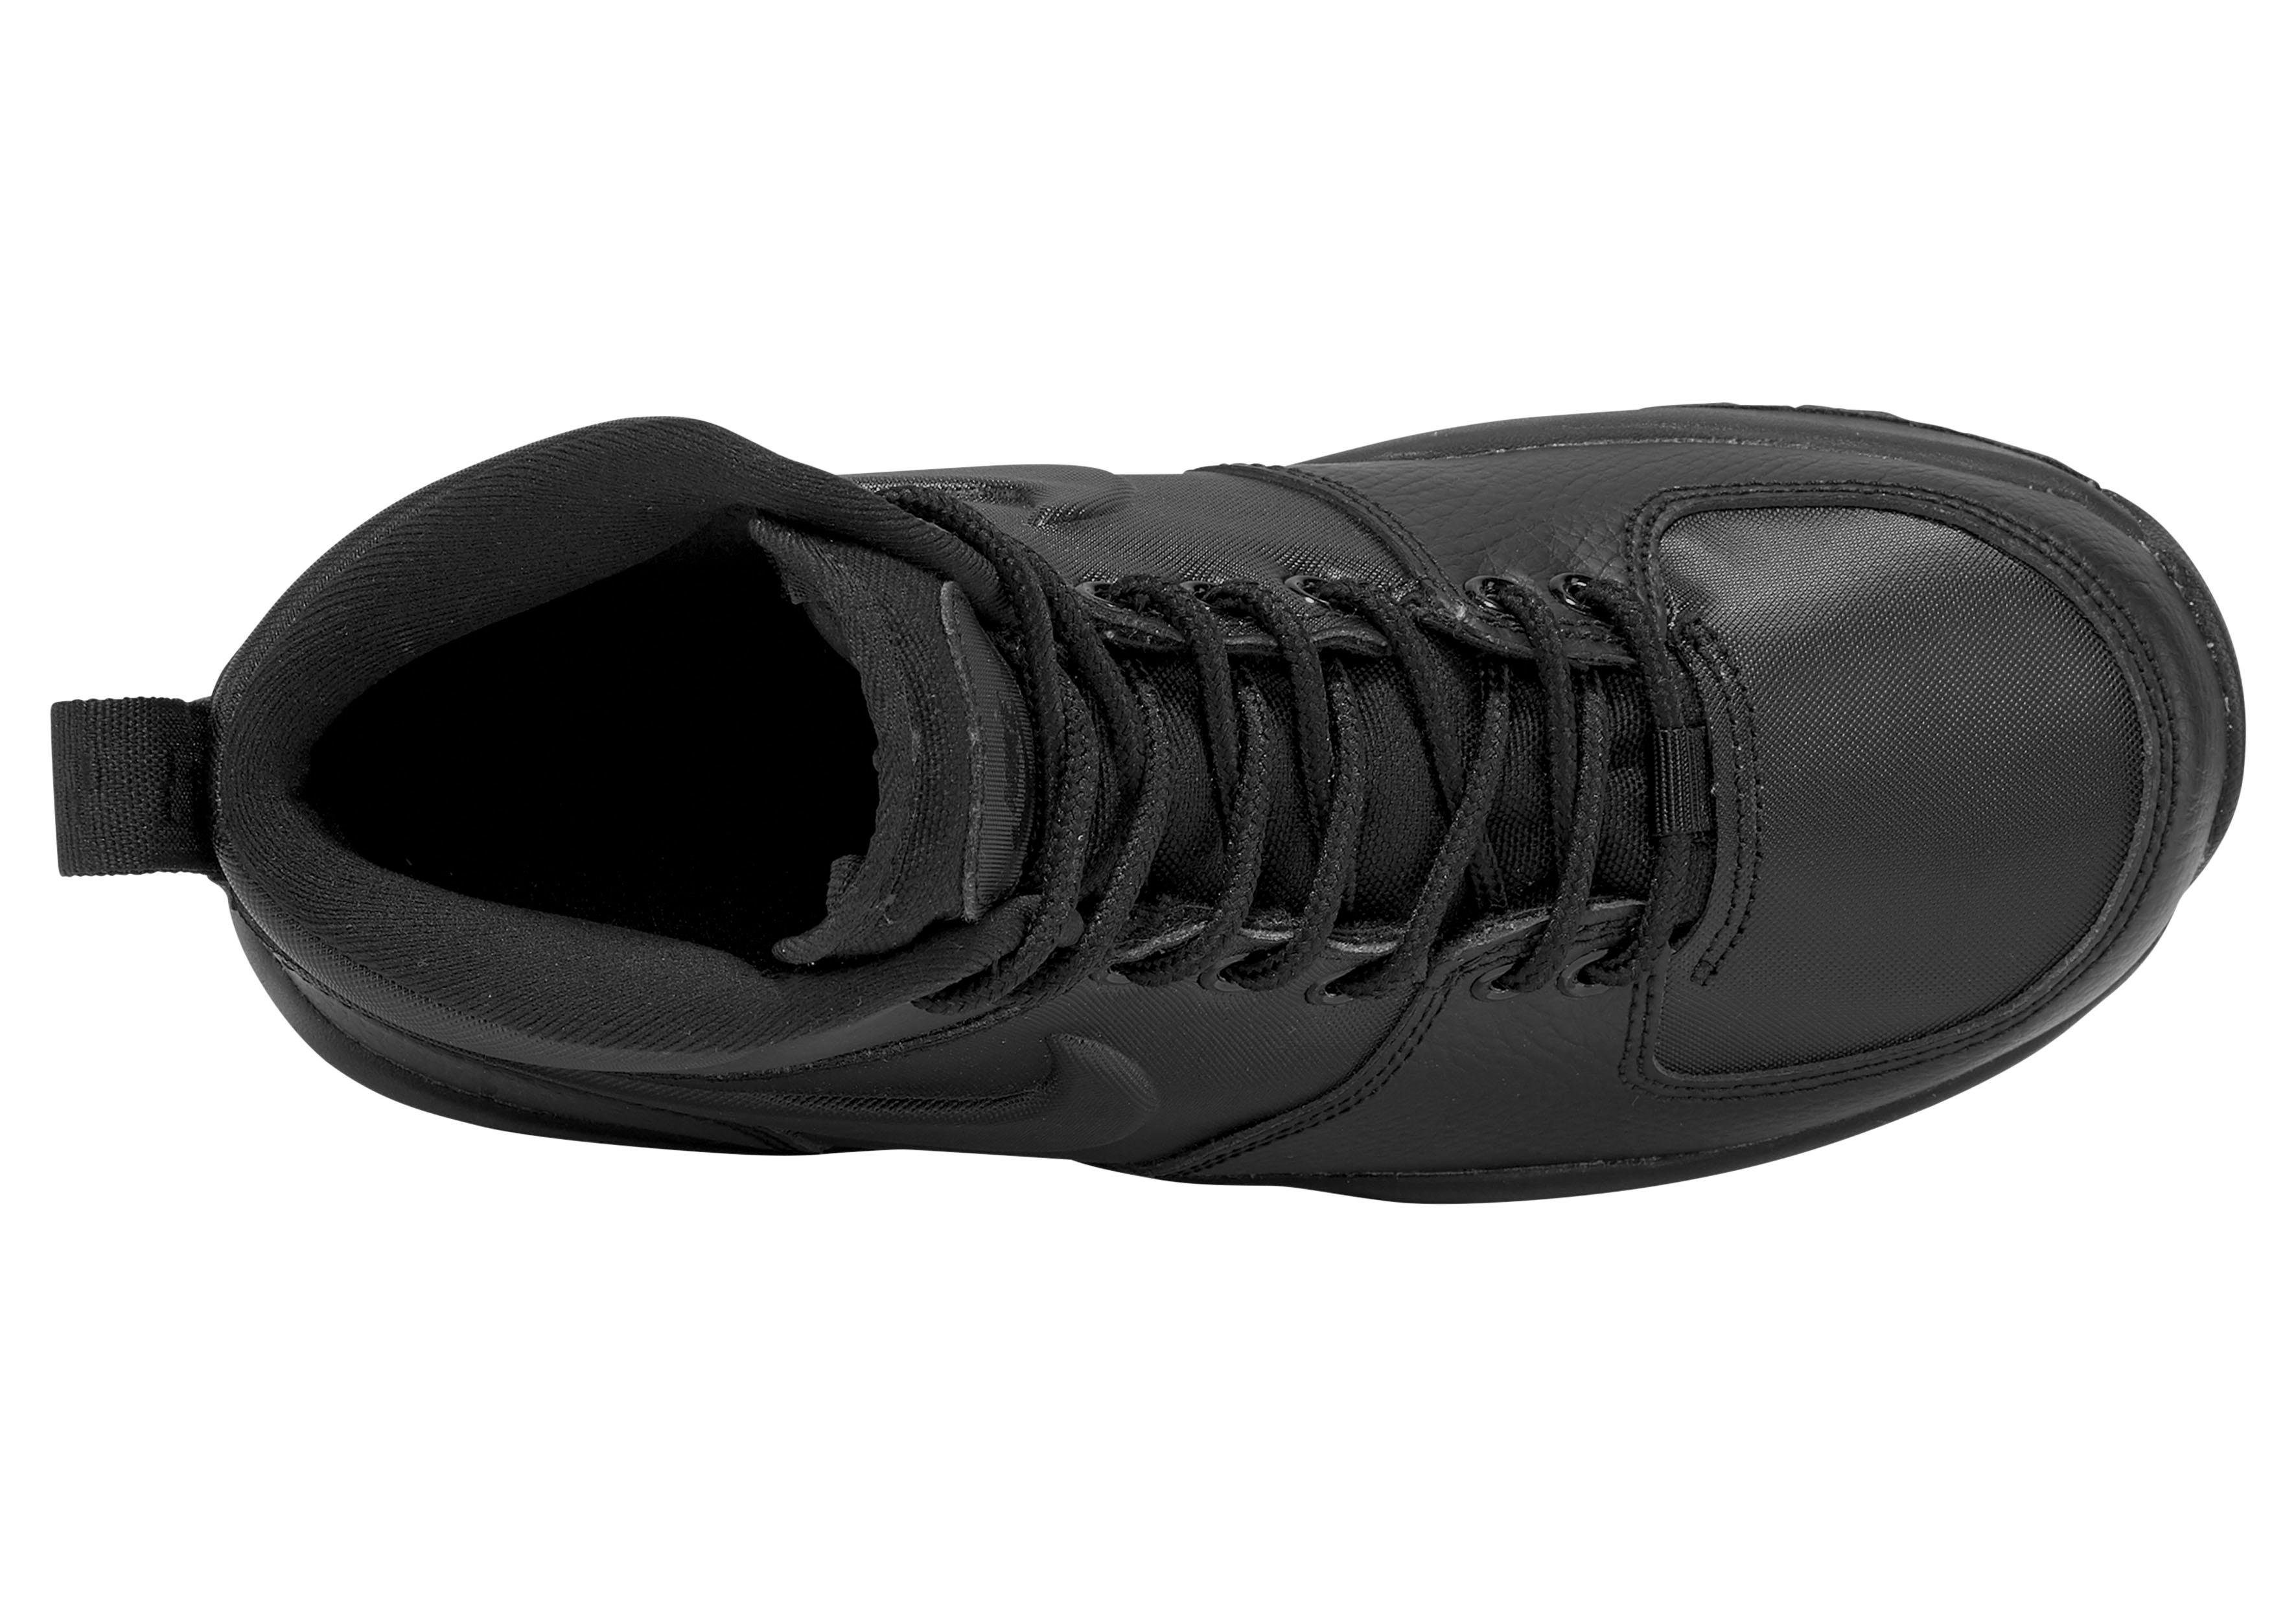 Nike Schnürboots schwarz Leather Sportswear Manoa